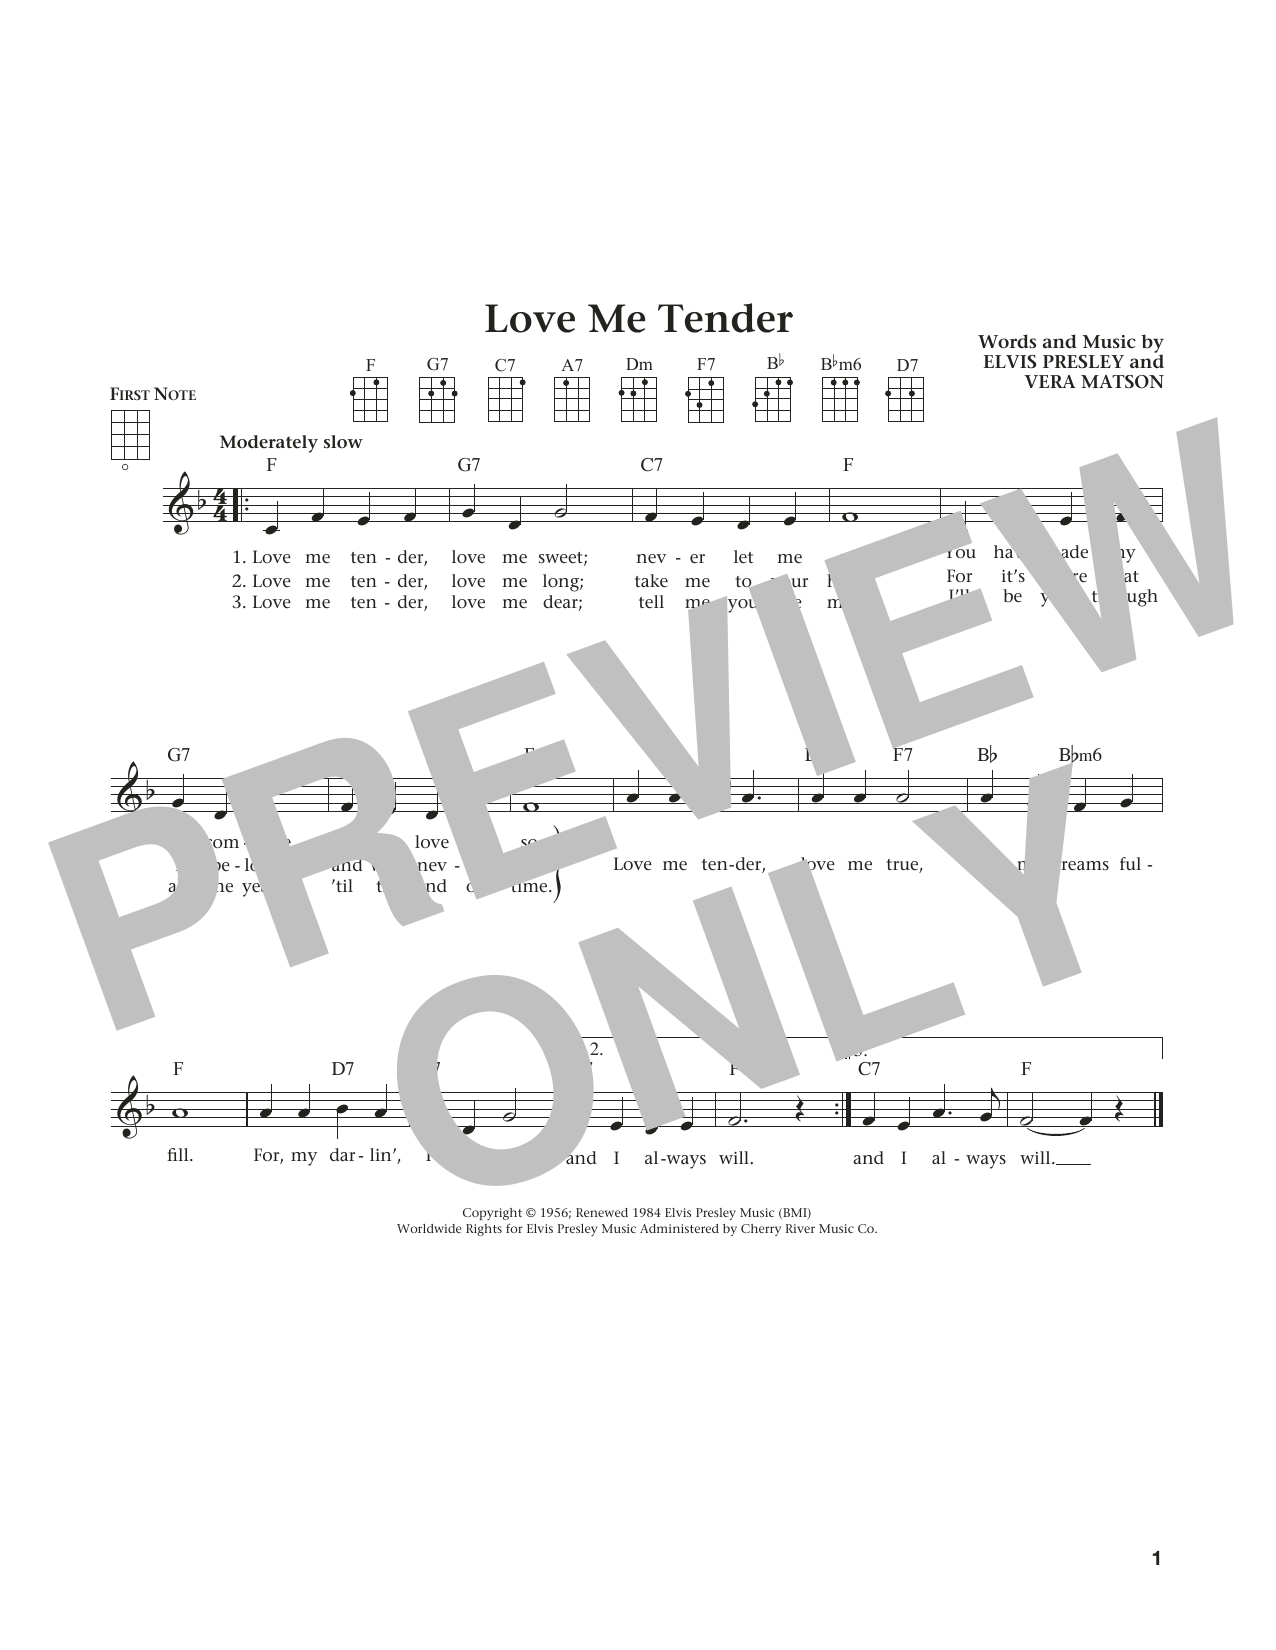 Elvis Presley Love Me Tender (from The Daily Ukulele) (arr. Liz and Jim Beloff) Sheet Music Notes & Chords for Ukulele - Download or Print PDF